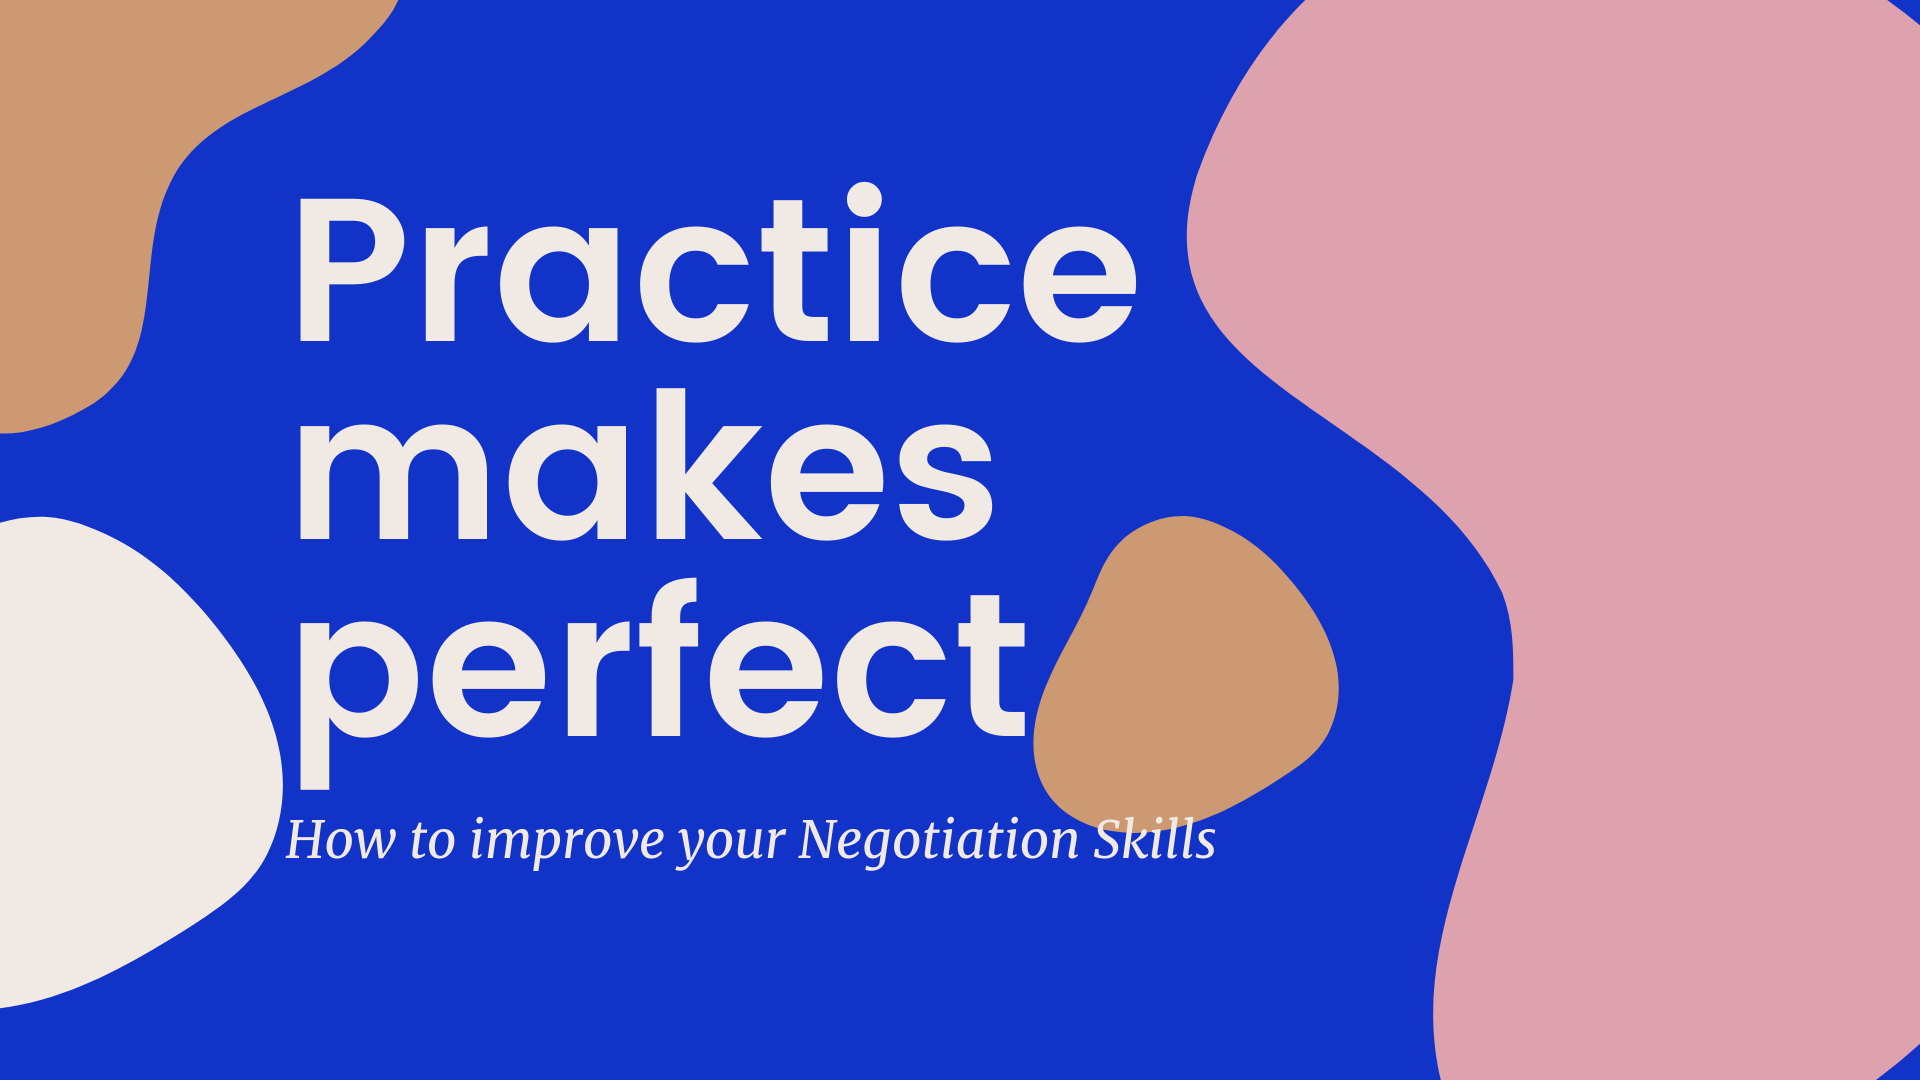 Negotiation Skills: Practice makes perfect